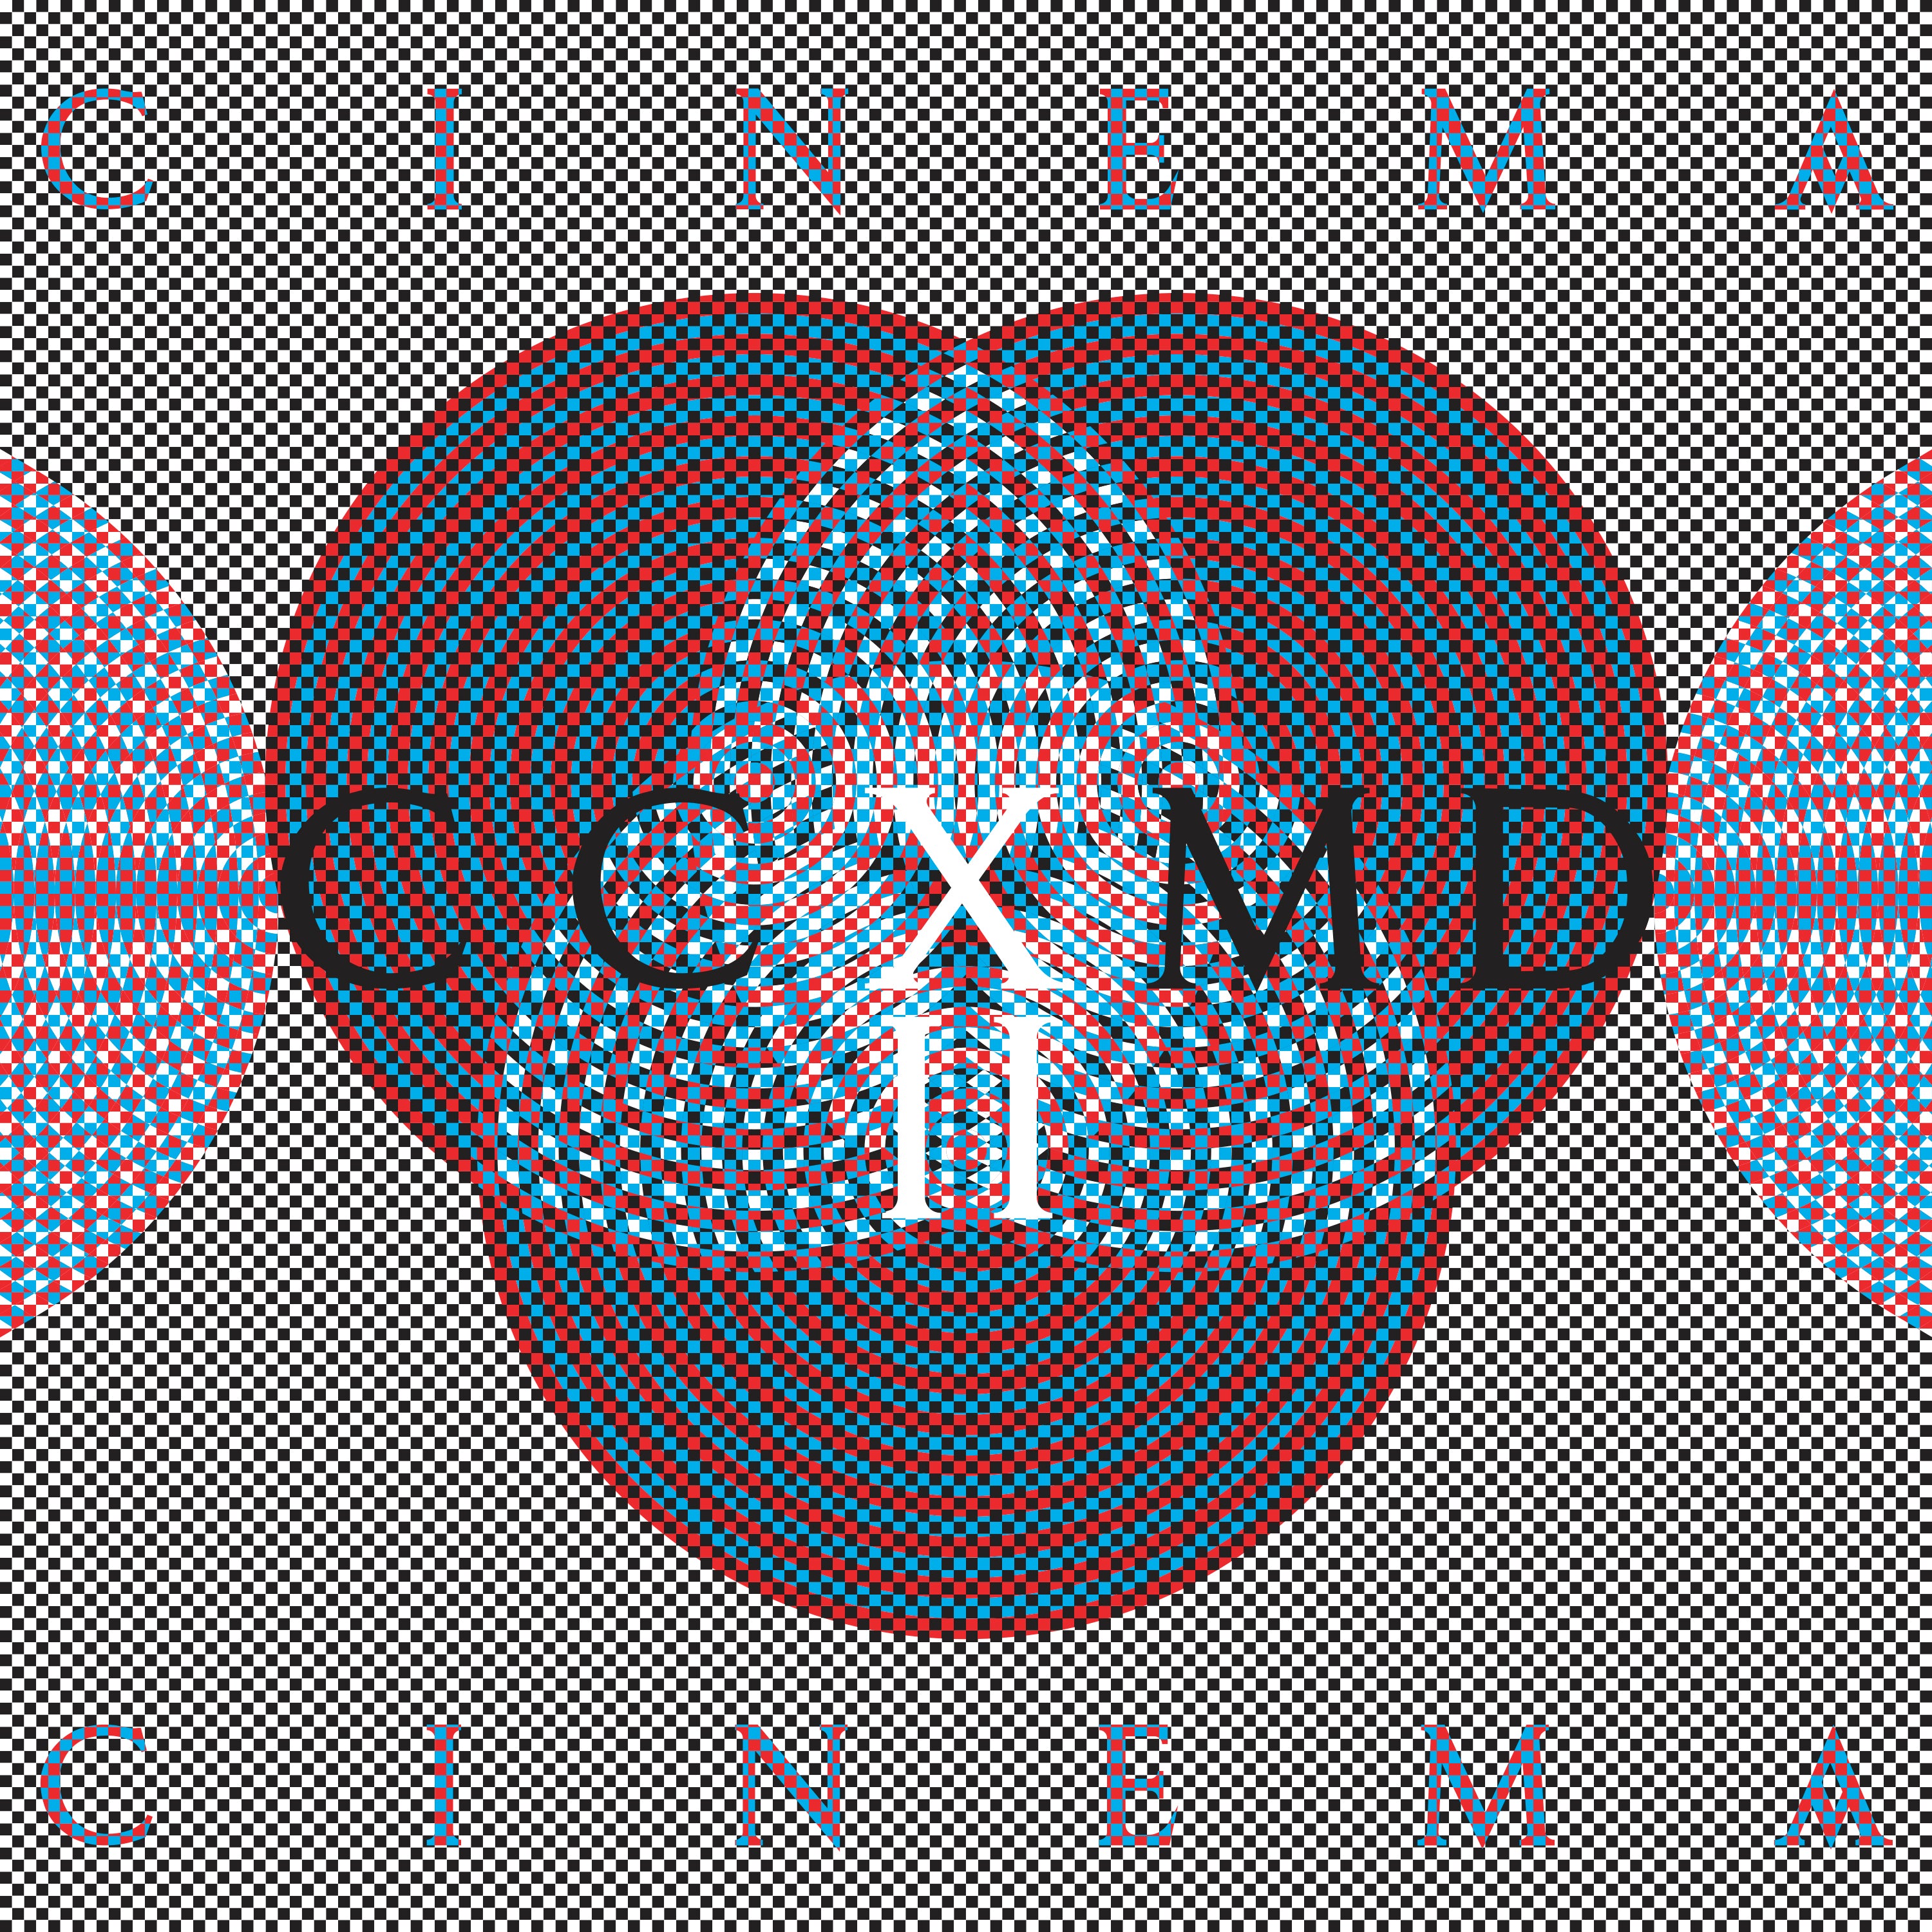 CINEMA CINEMA - CCXMDII